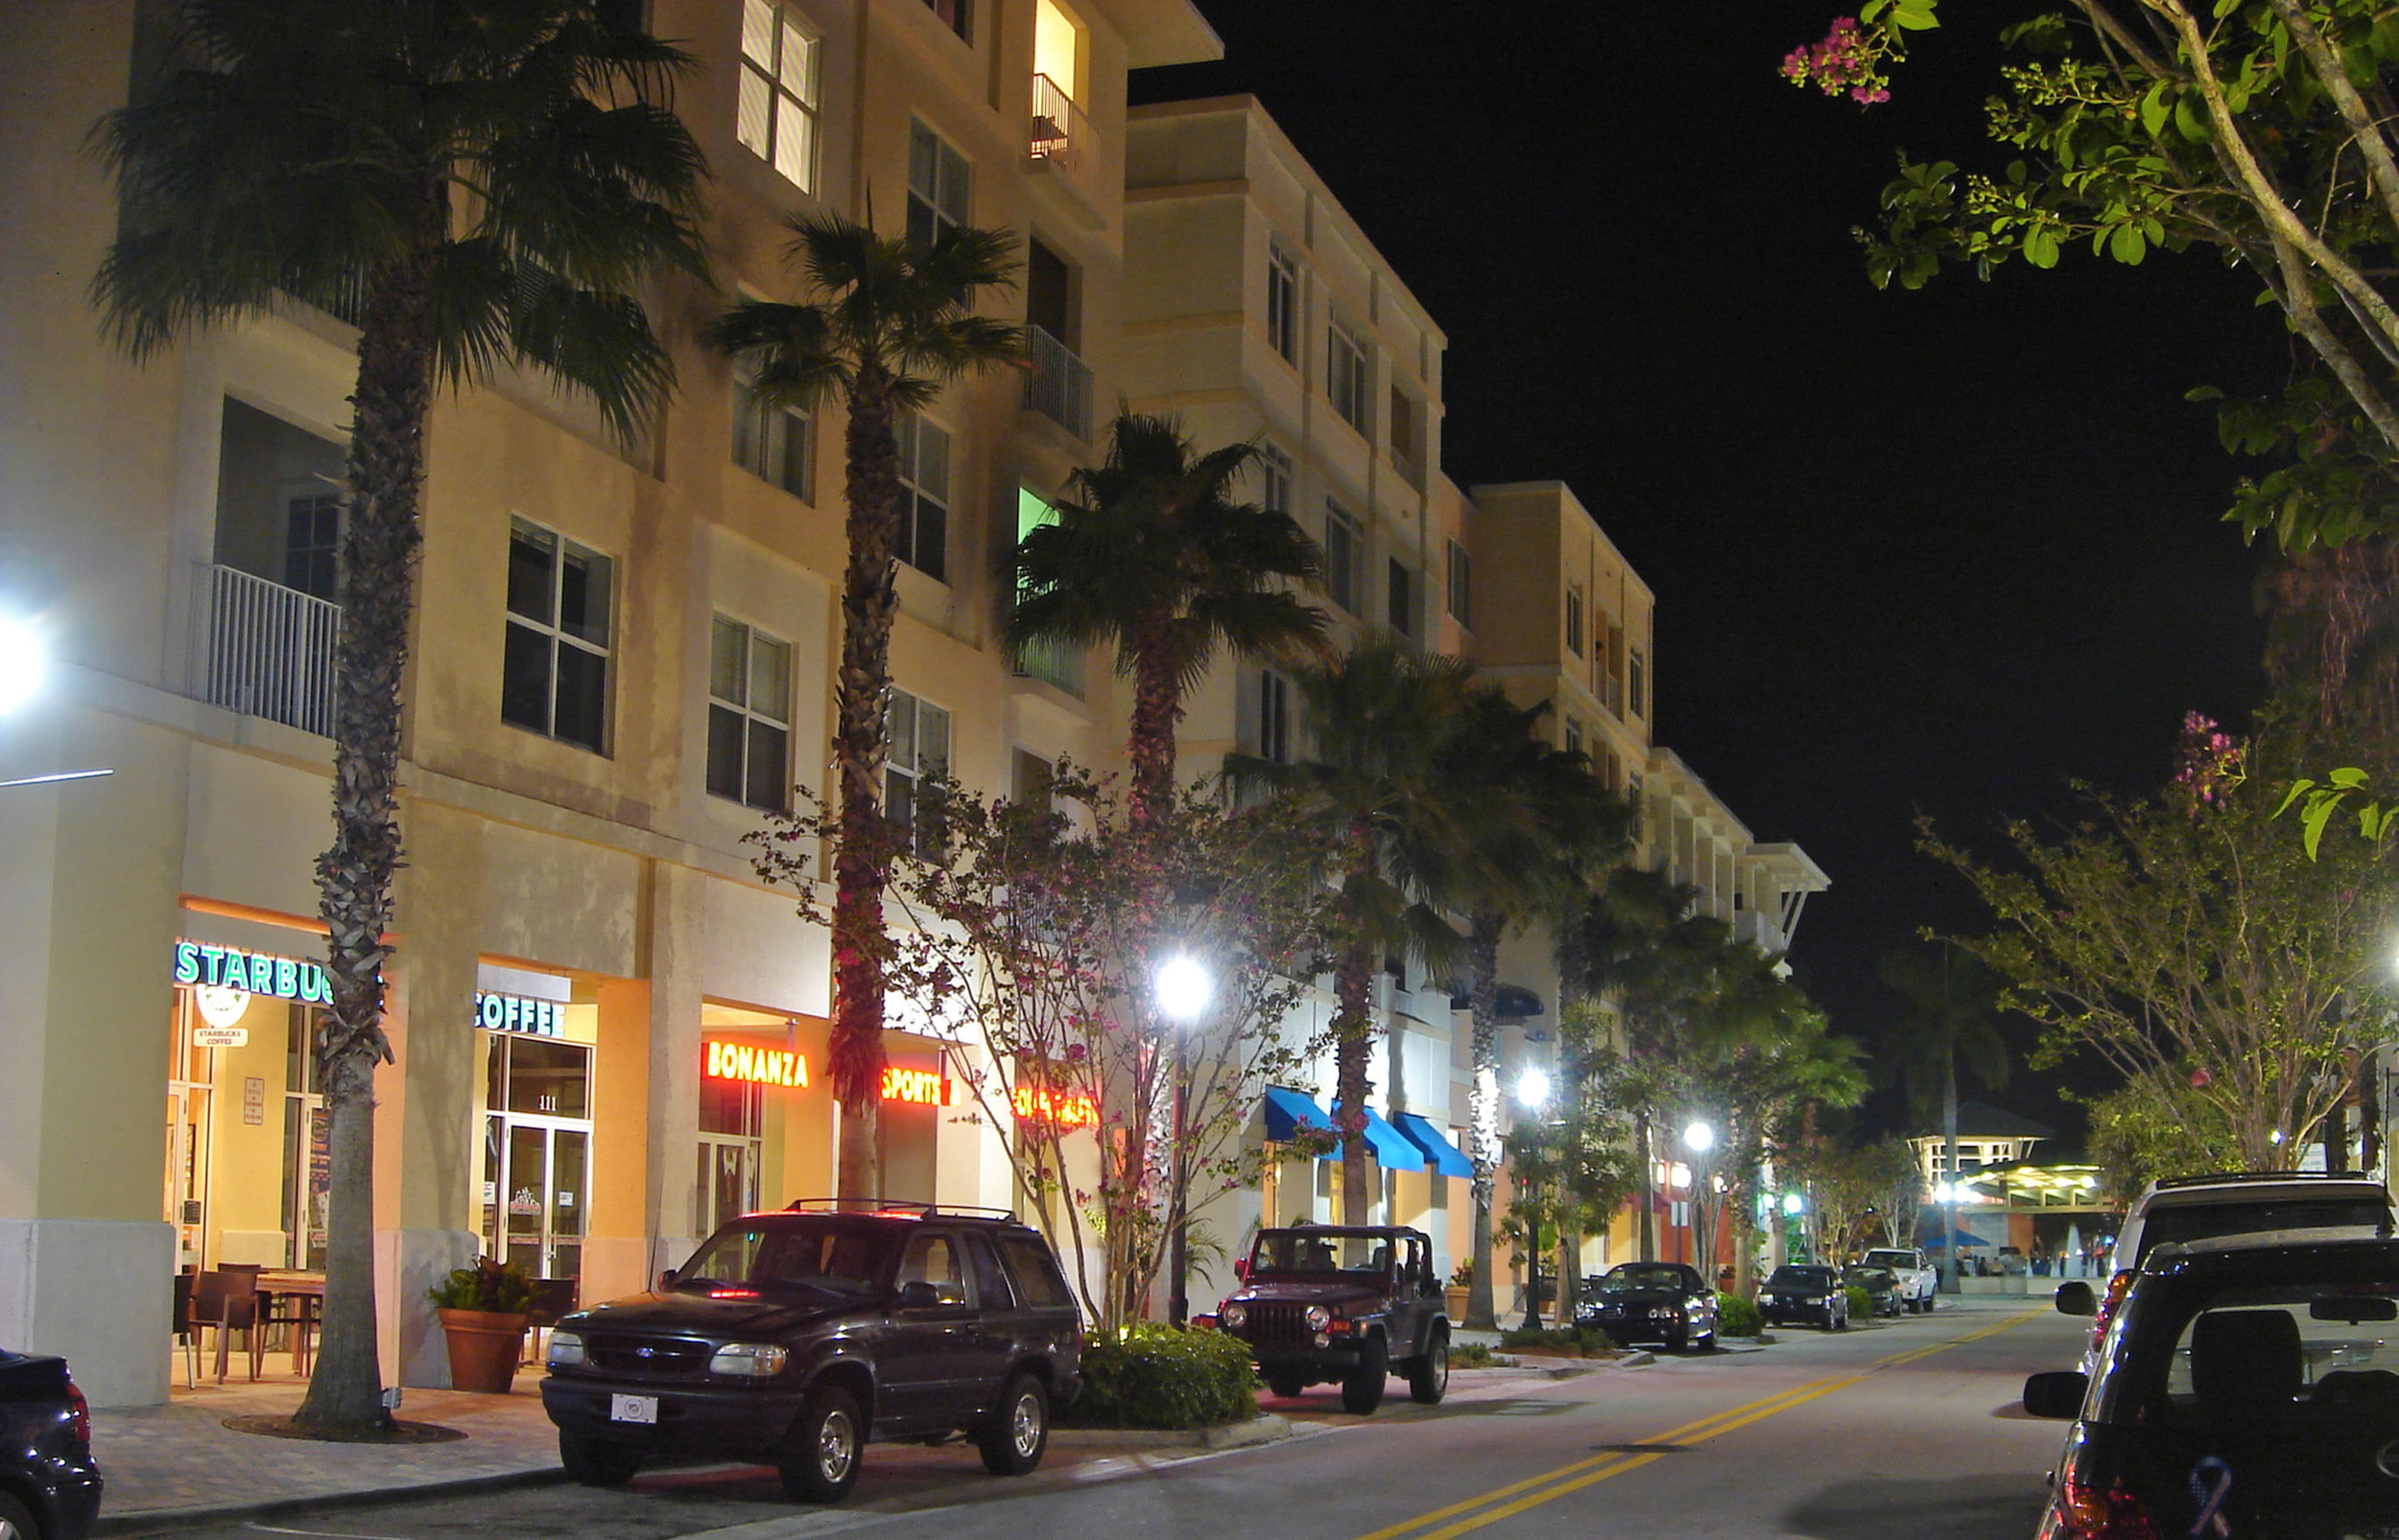 Abacoa Town Center Jupiter Florida Lively Night Streetscape.jpg